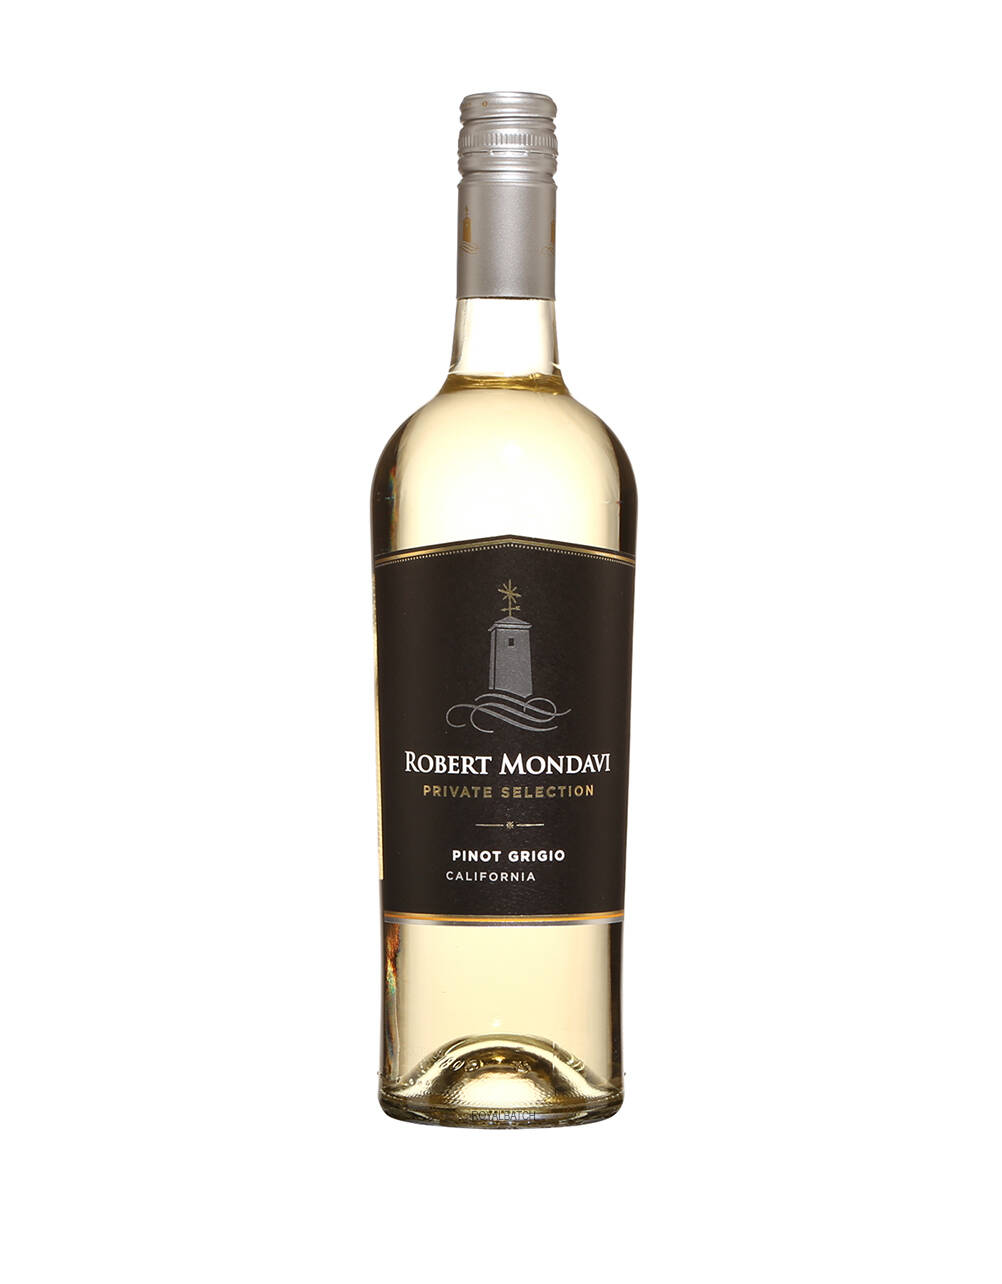 Robert Mondavi Private Selection Pinot Grigio 2020 Wine